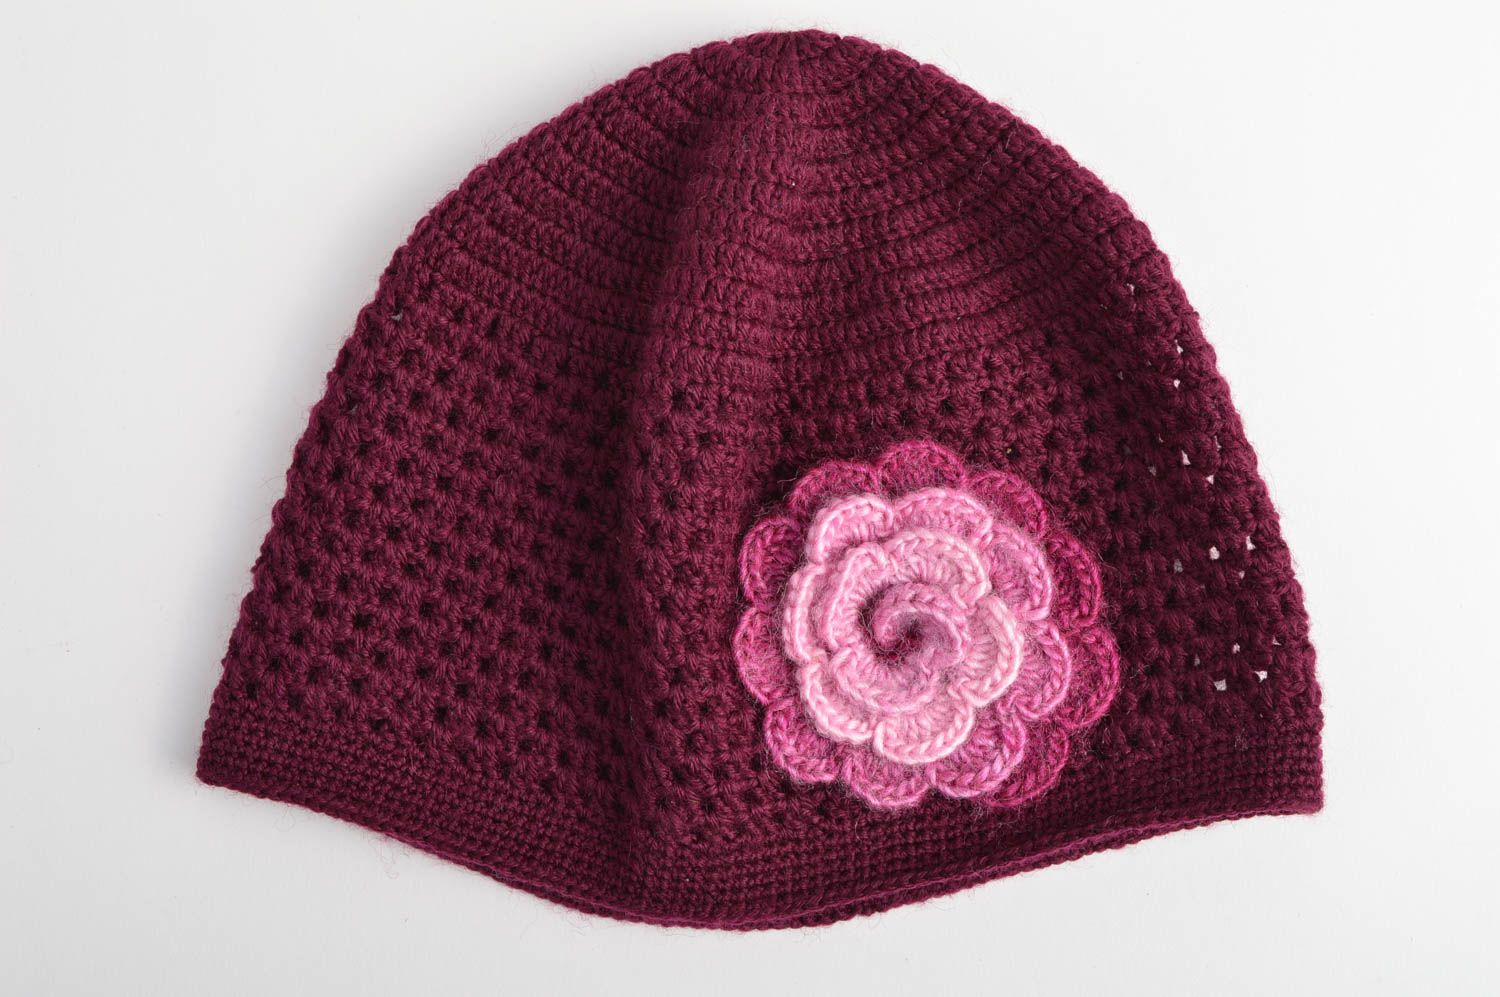 Beautiful homemade crochet baby hat handmade wool hat warm hat gifts for kids photo 3